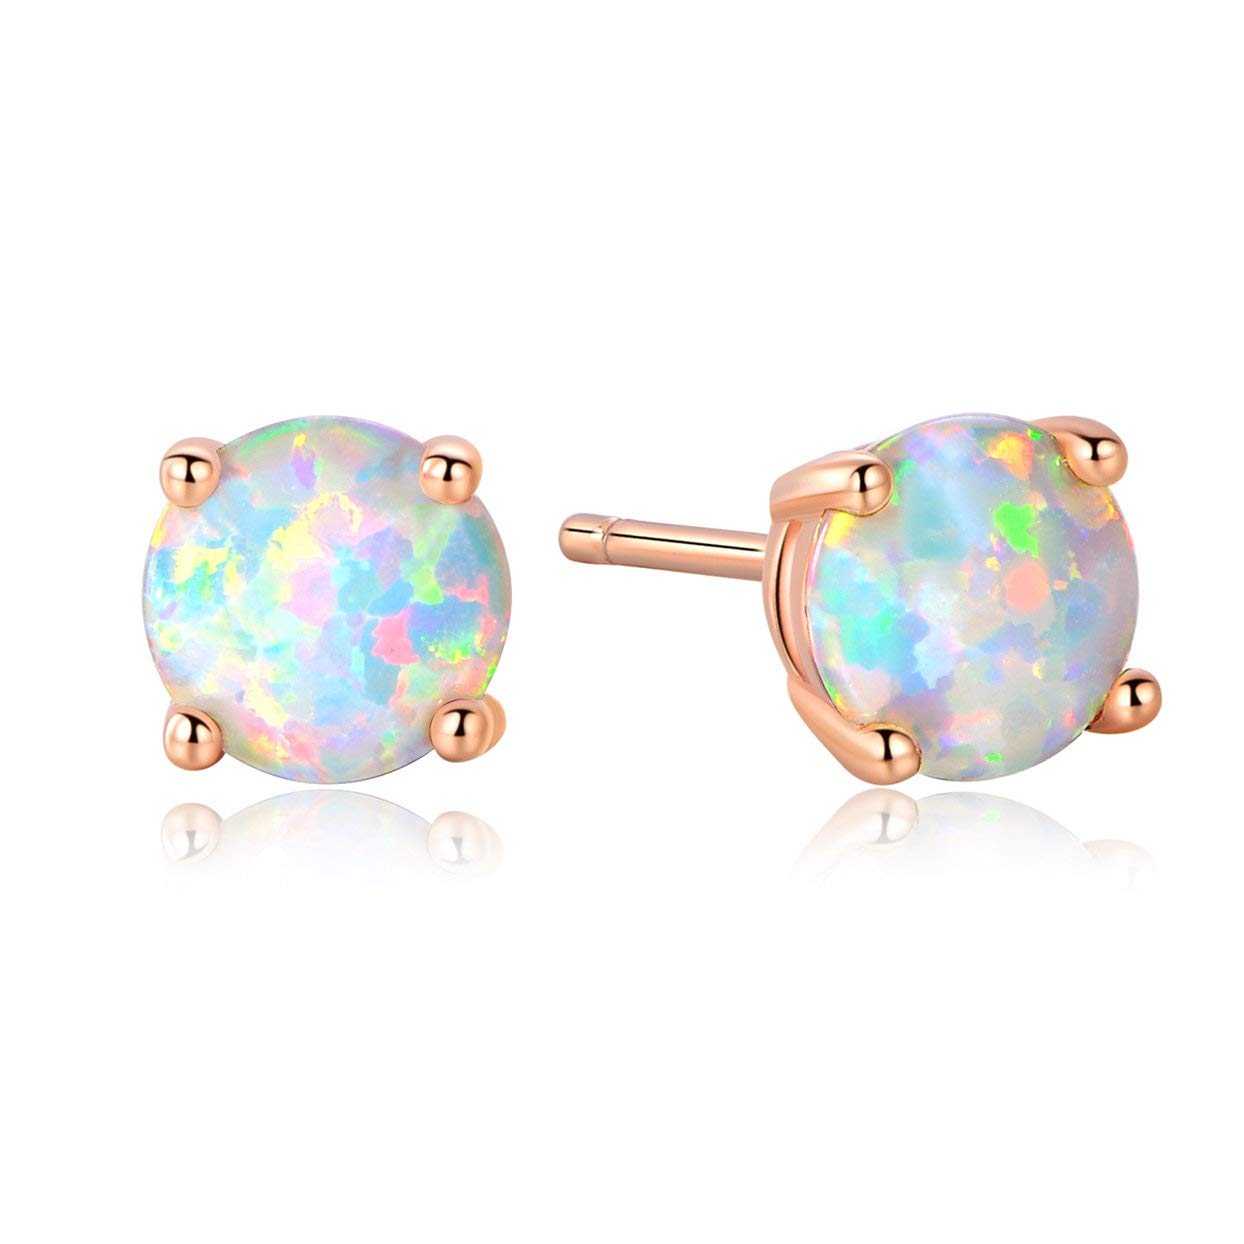 Stunning Rose Gold Plated Opal Studs,GEMSME 18K Rose Gold Plated Opal Stud Earrings 6MM Round For Women